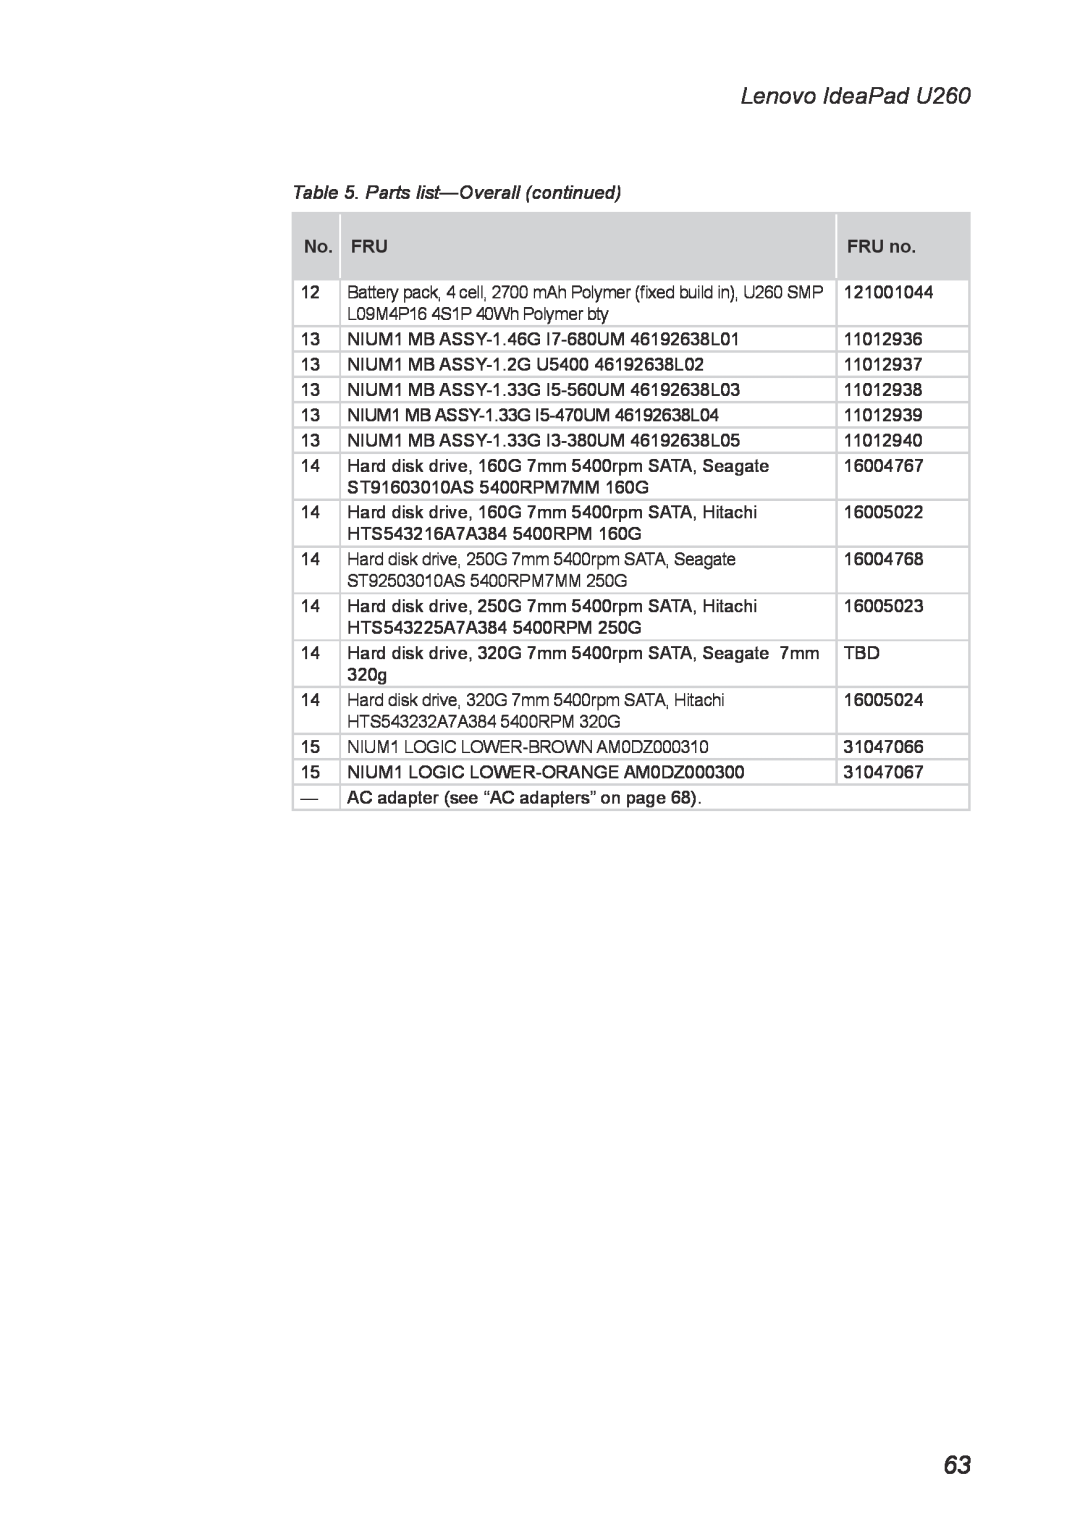 Lenovo manual Parts list-Overall continued, Lenovo IdeaPad U260, No. FRU, FRU no 